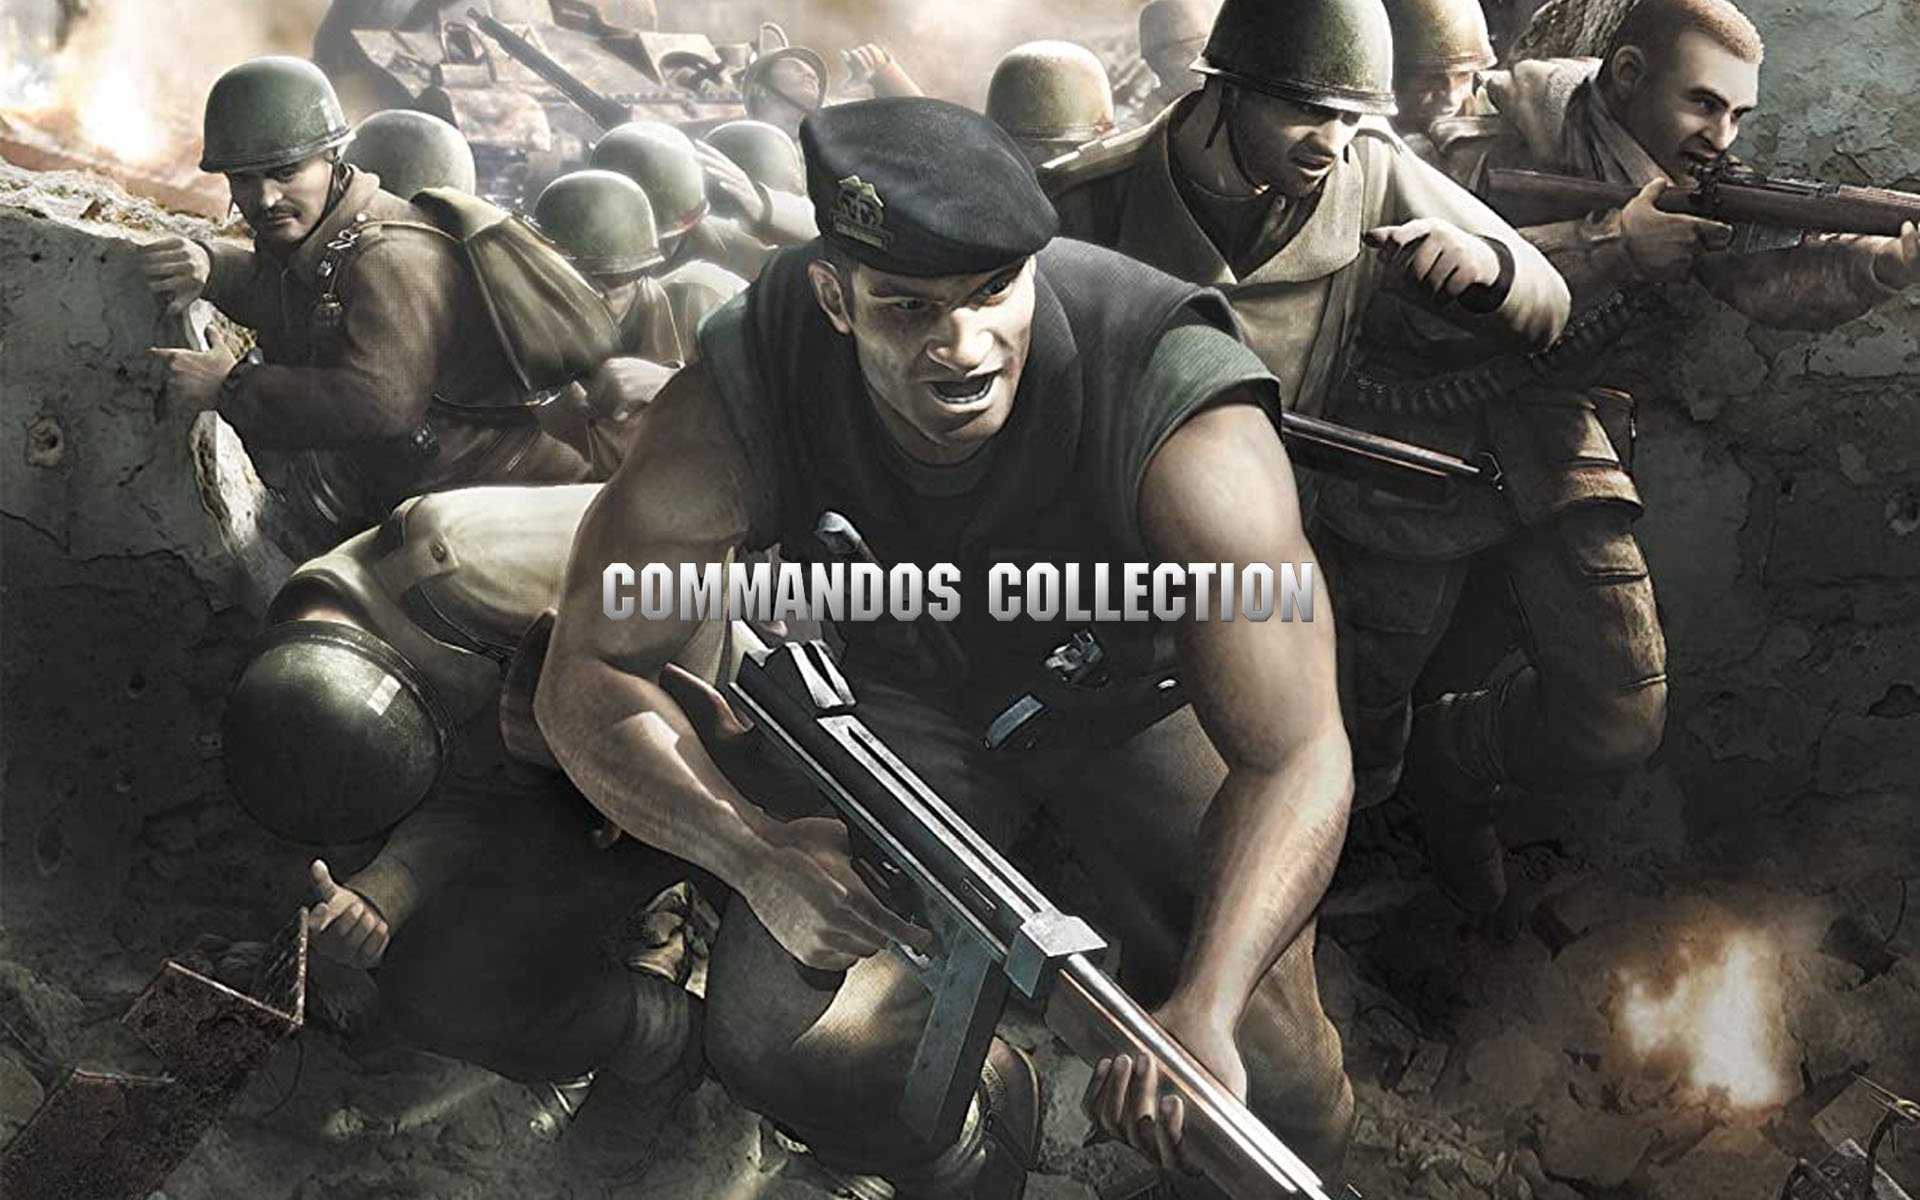 Compre Commandos Collection a partir de R$ 27.99